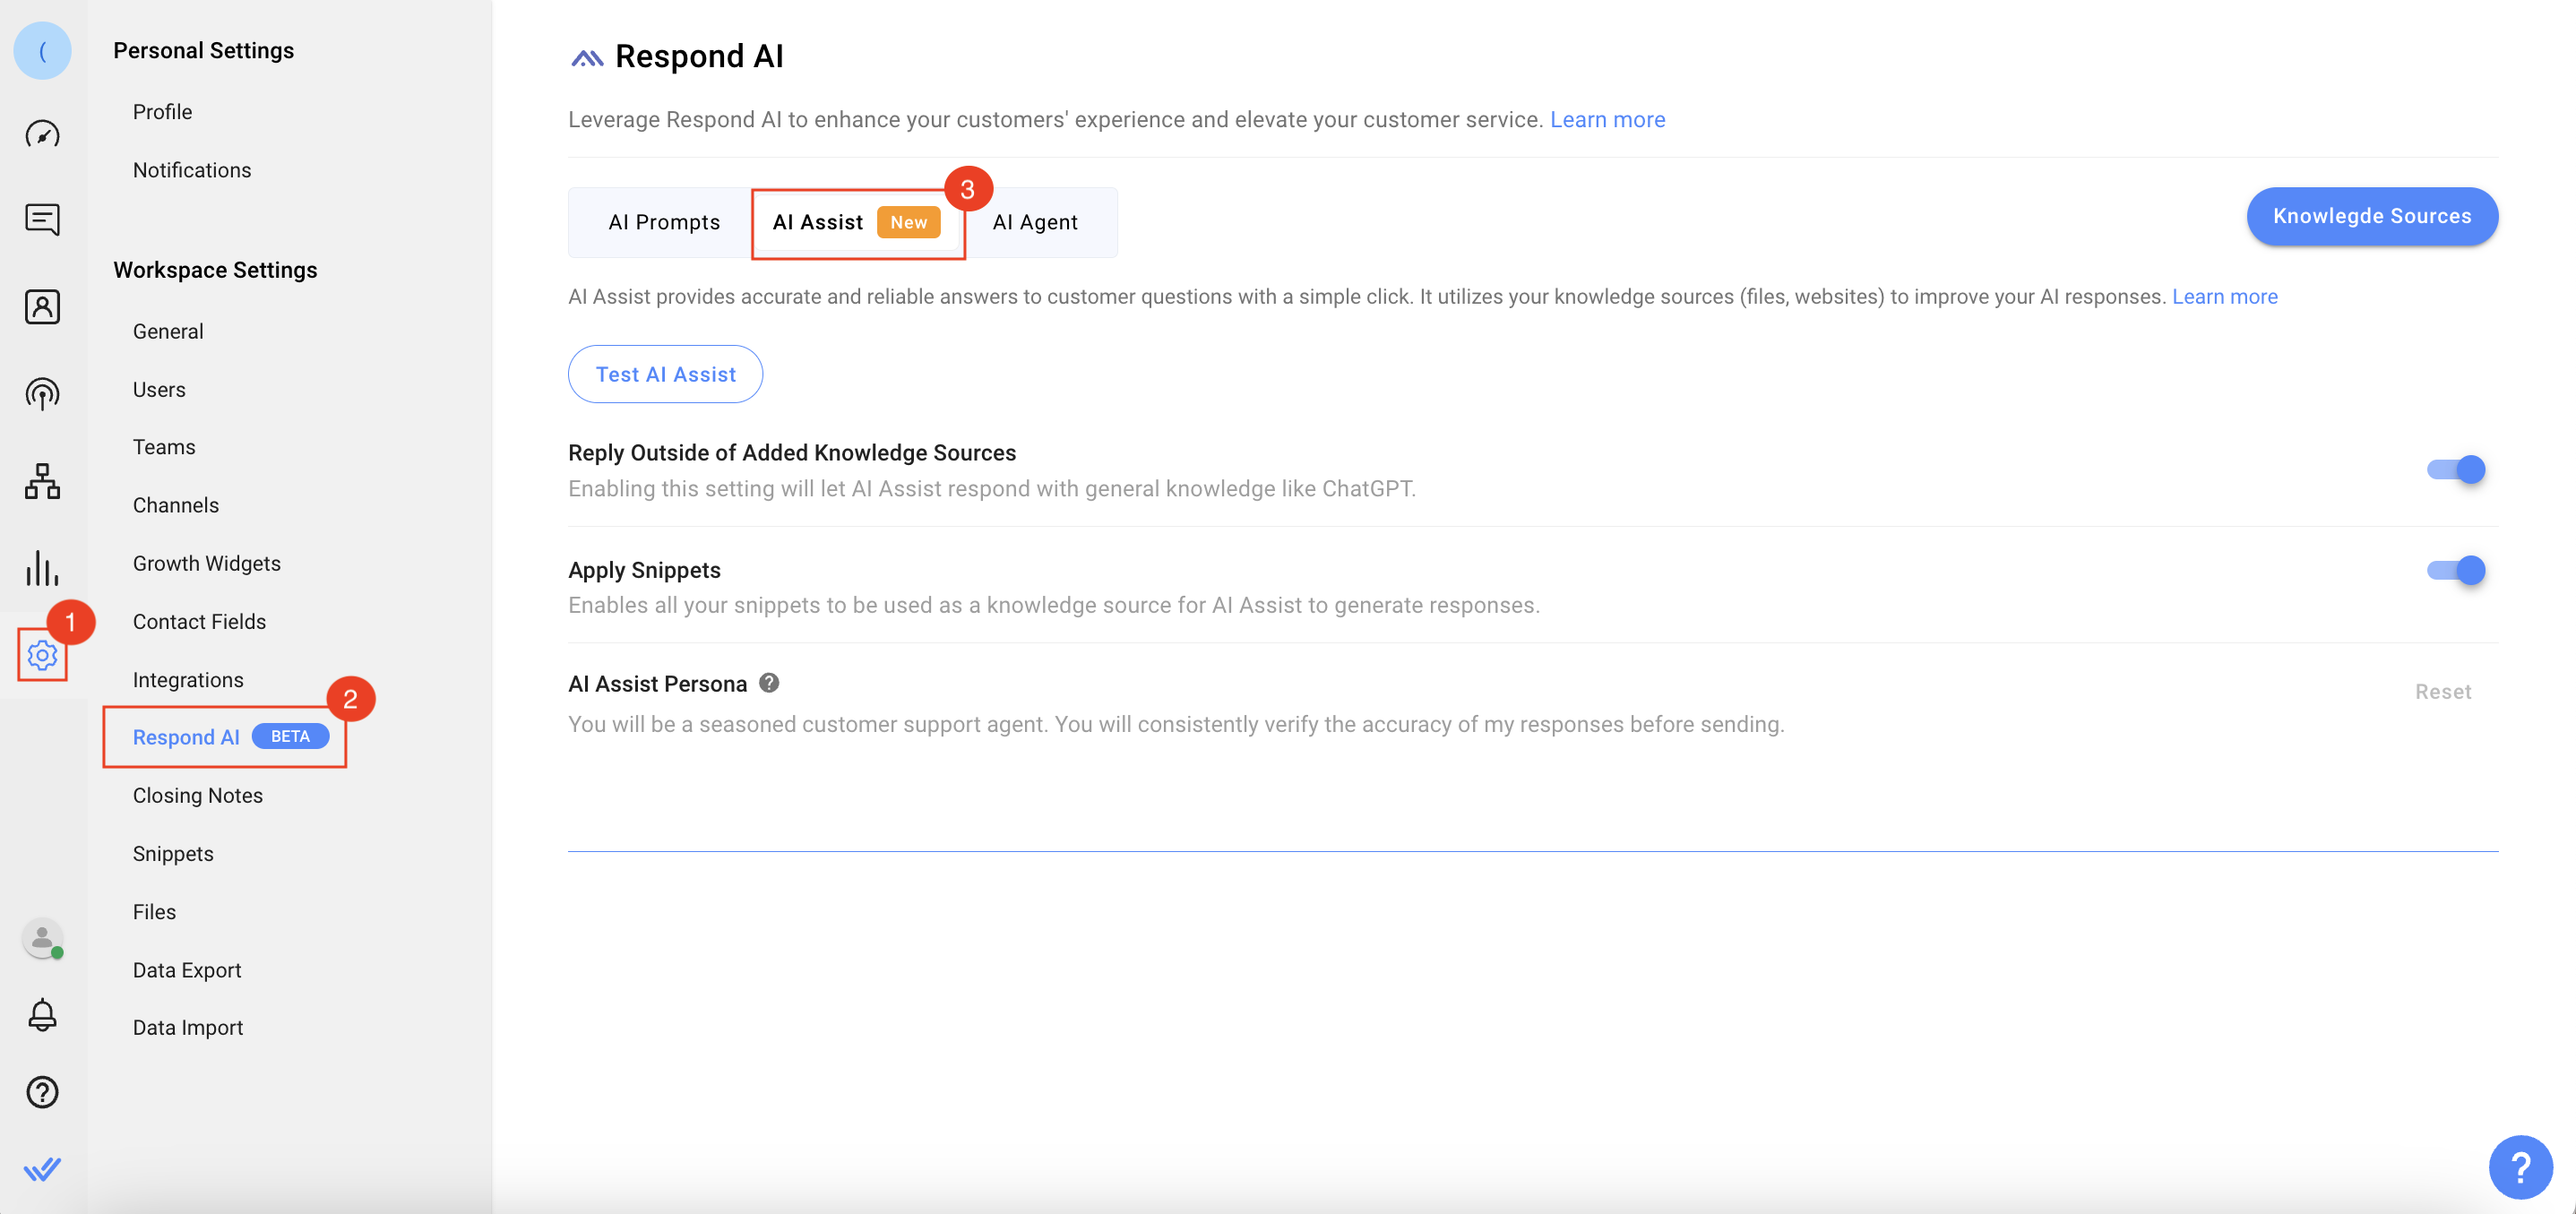 Getting to AI Assist settings tab via Workspace Settings: Respond AI